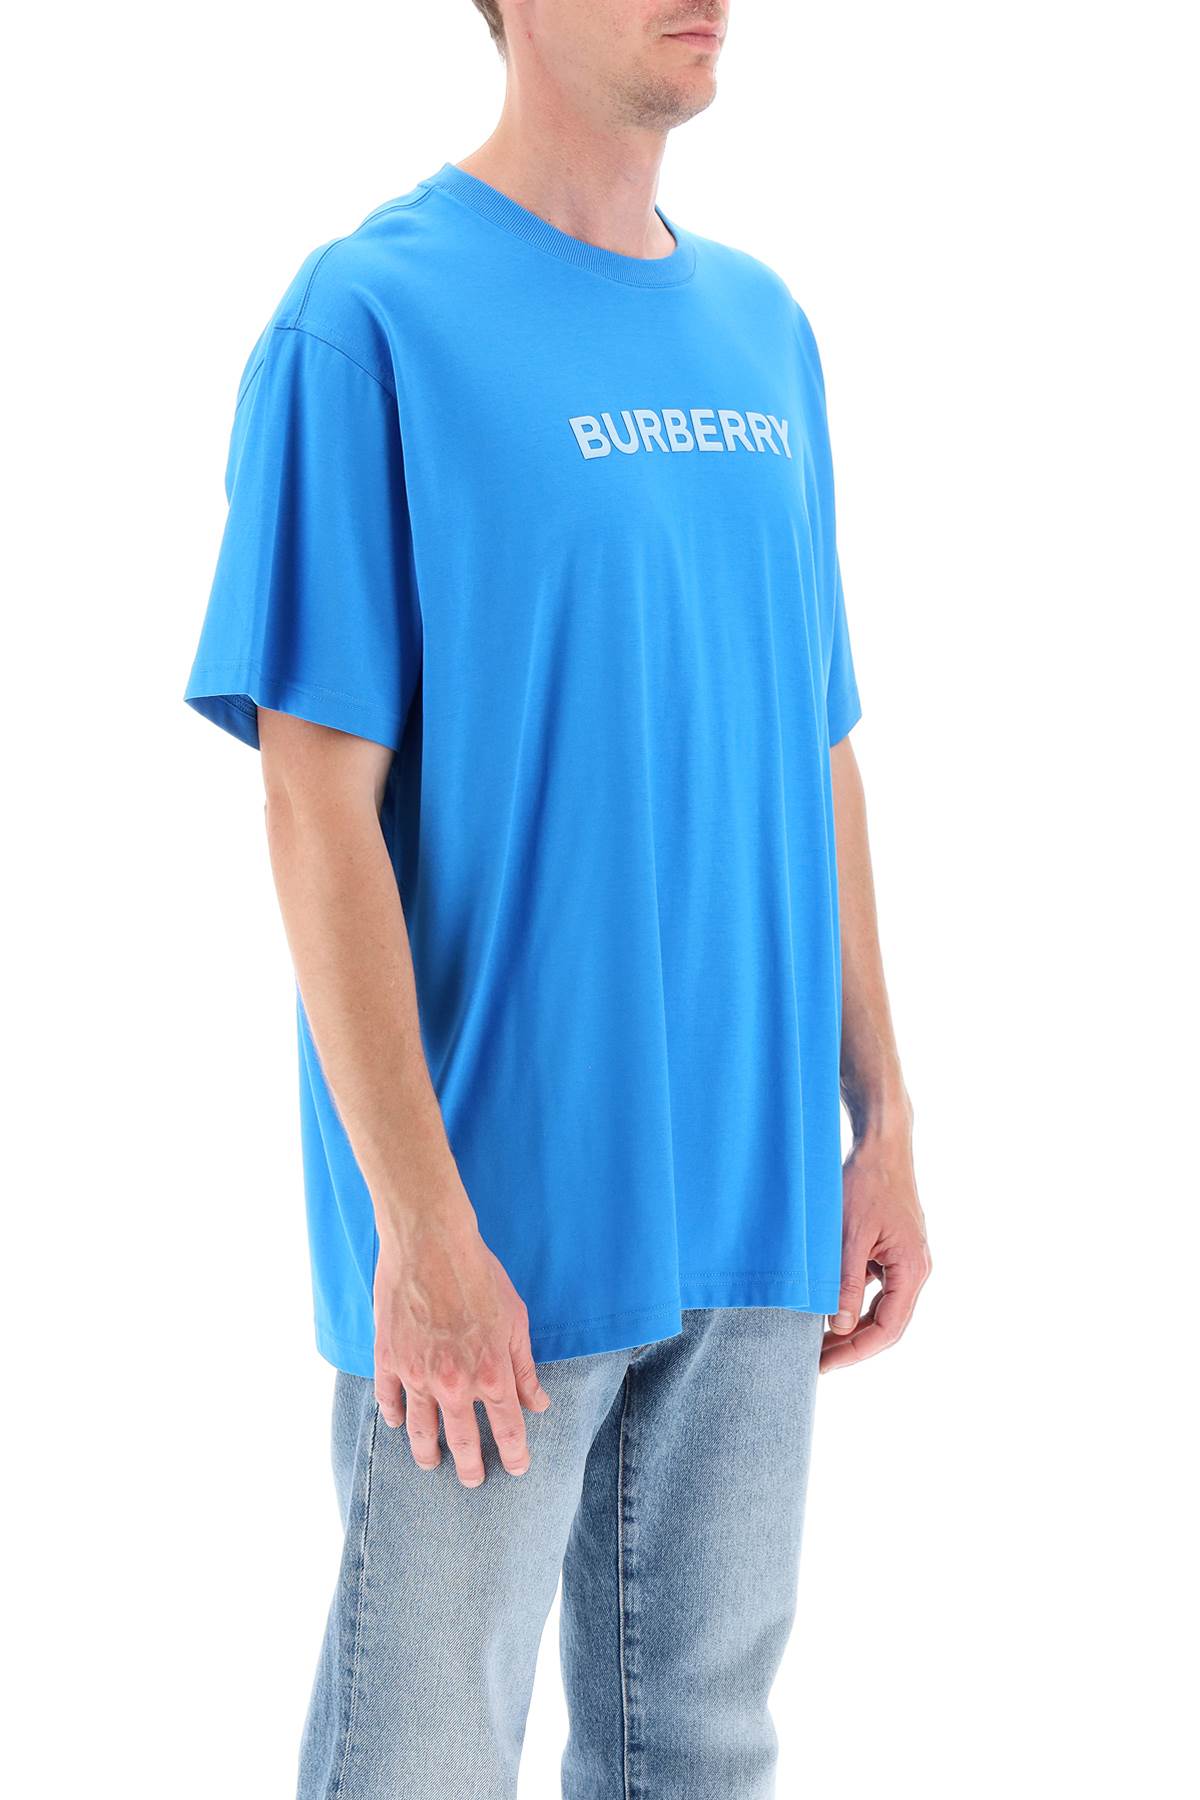 Burberry logo print t-shirt